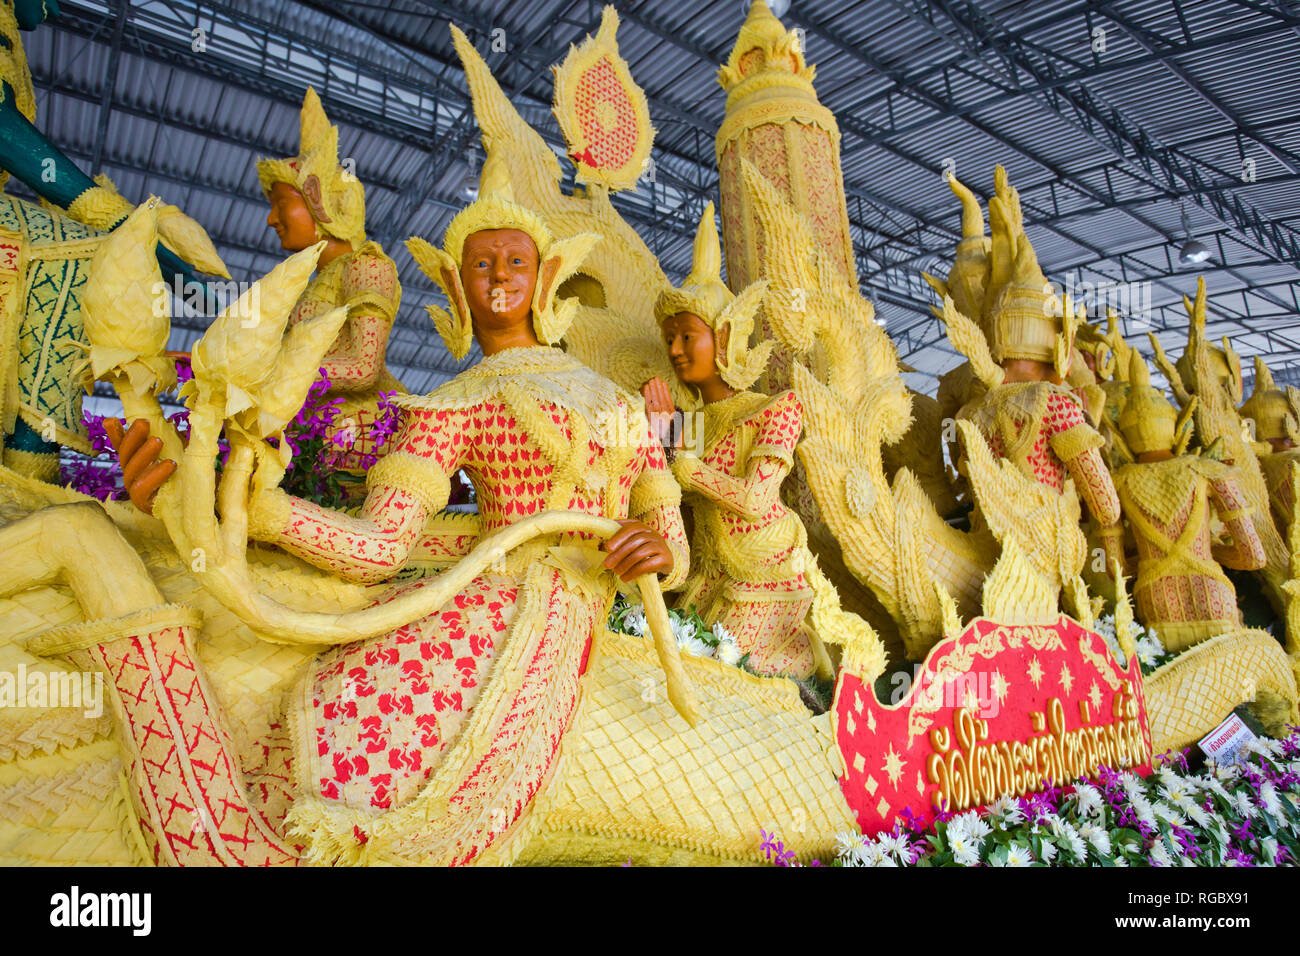 Thailand, der Provinz Ubon Ratchathani, Kerze Festival, Wax Works Stockfoto